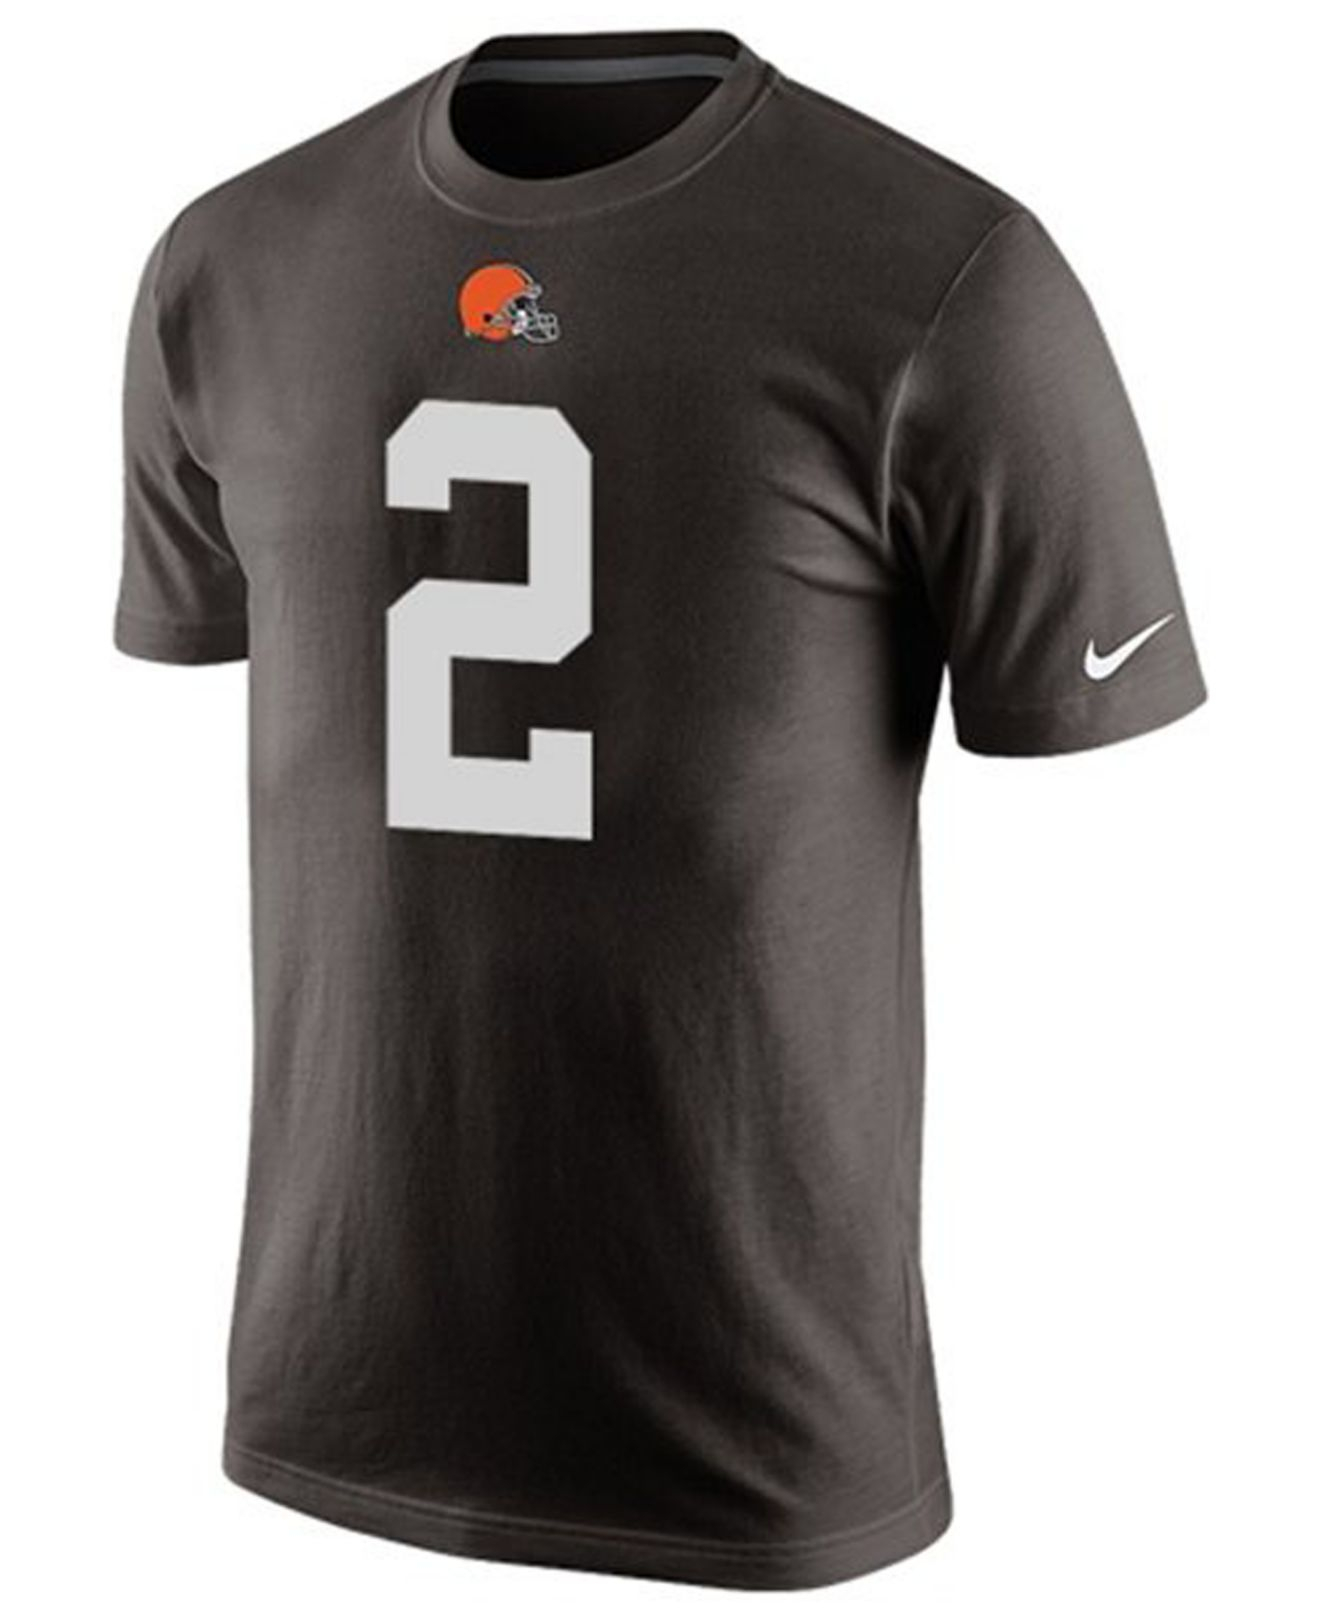 Lyst - Nike Men's Short-sleeve Johnny Manziel Cleveland Browns T-shirt ...